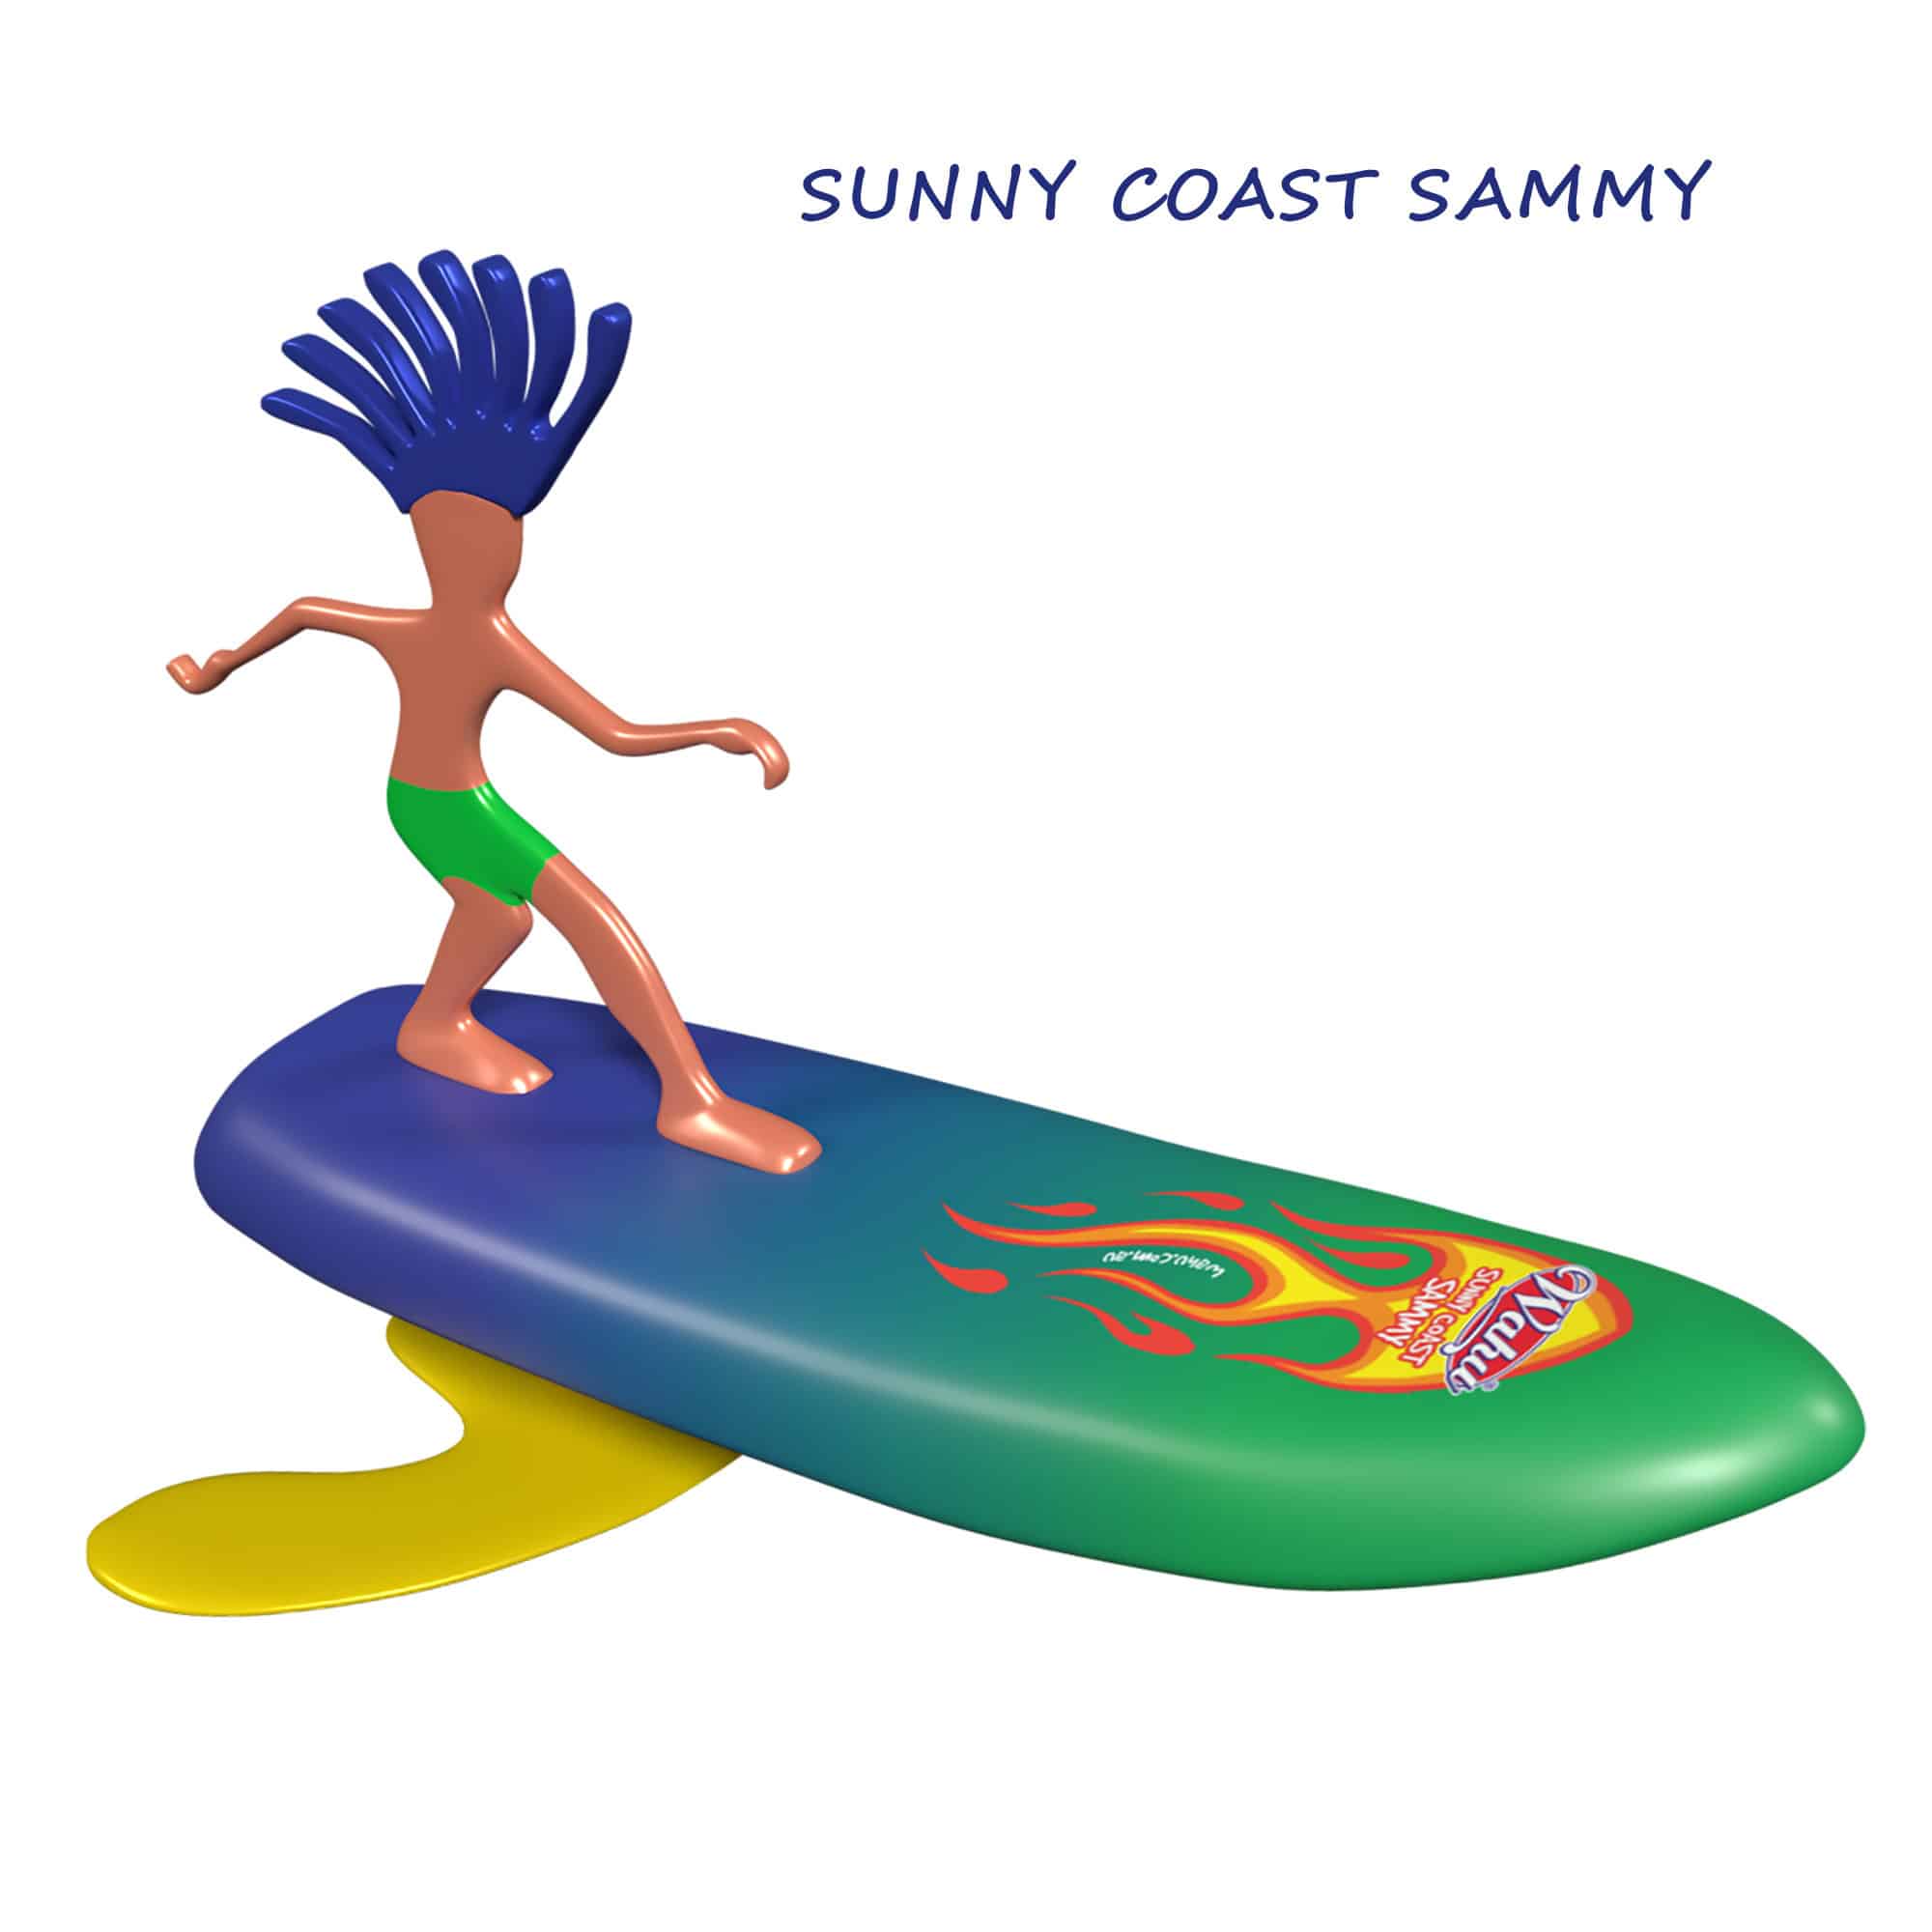 Wahu - Surfer Dudes - Sunny Coast Sammy